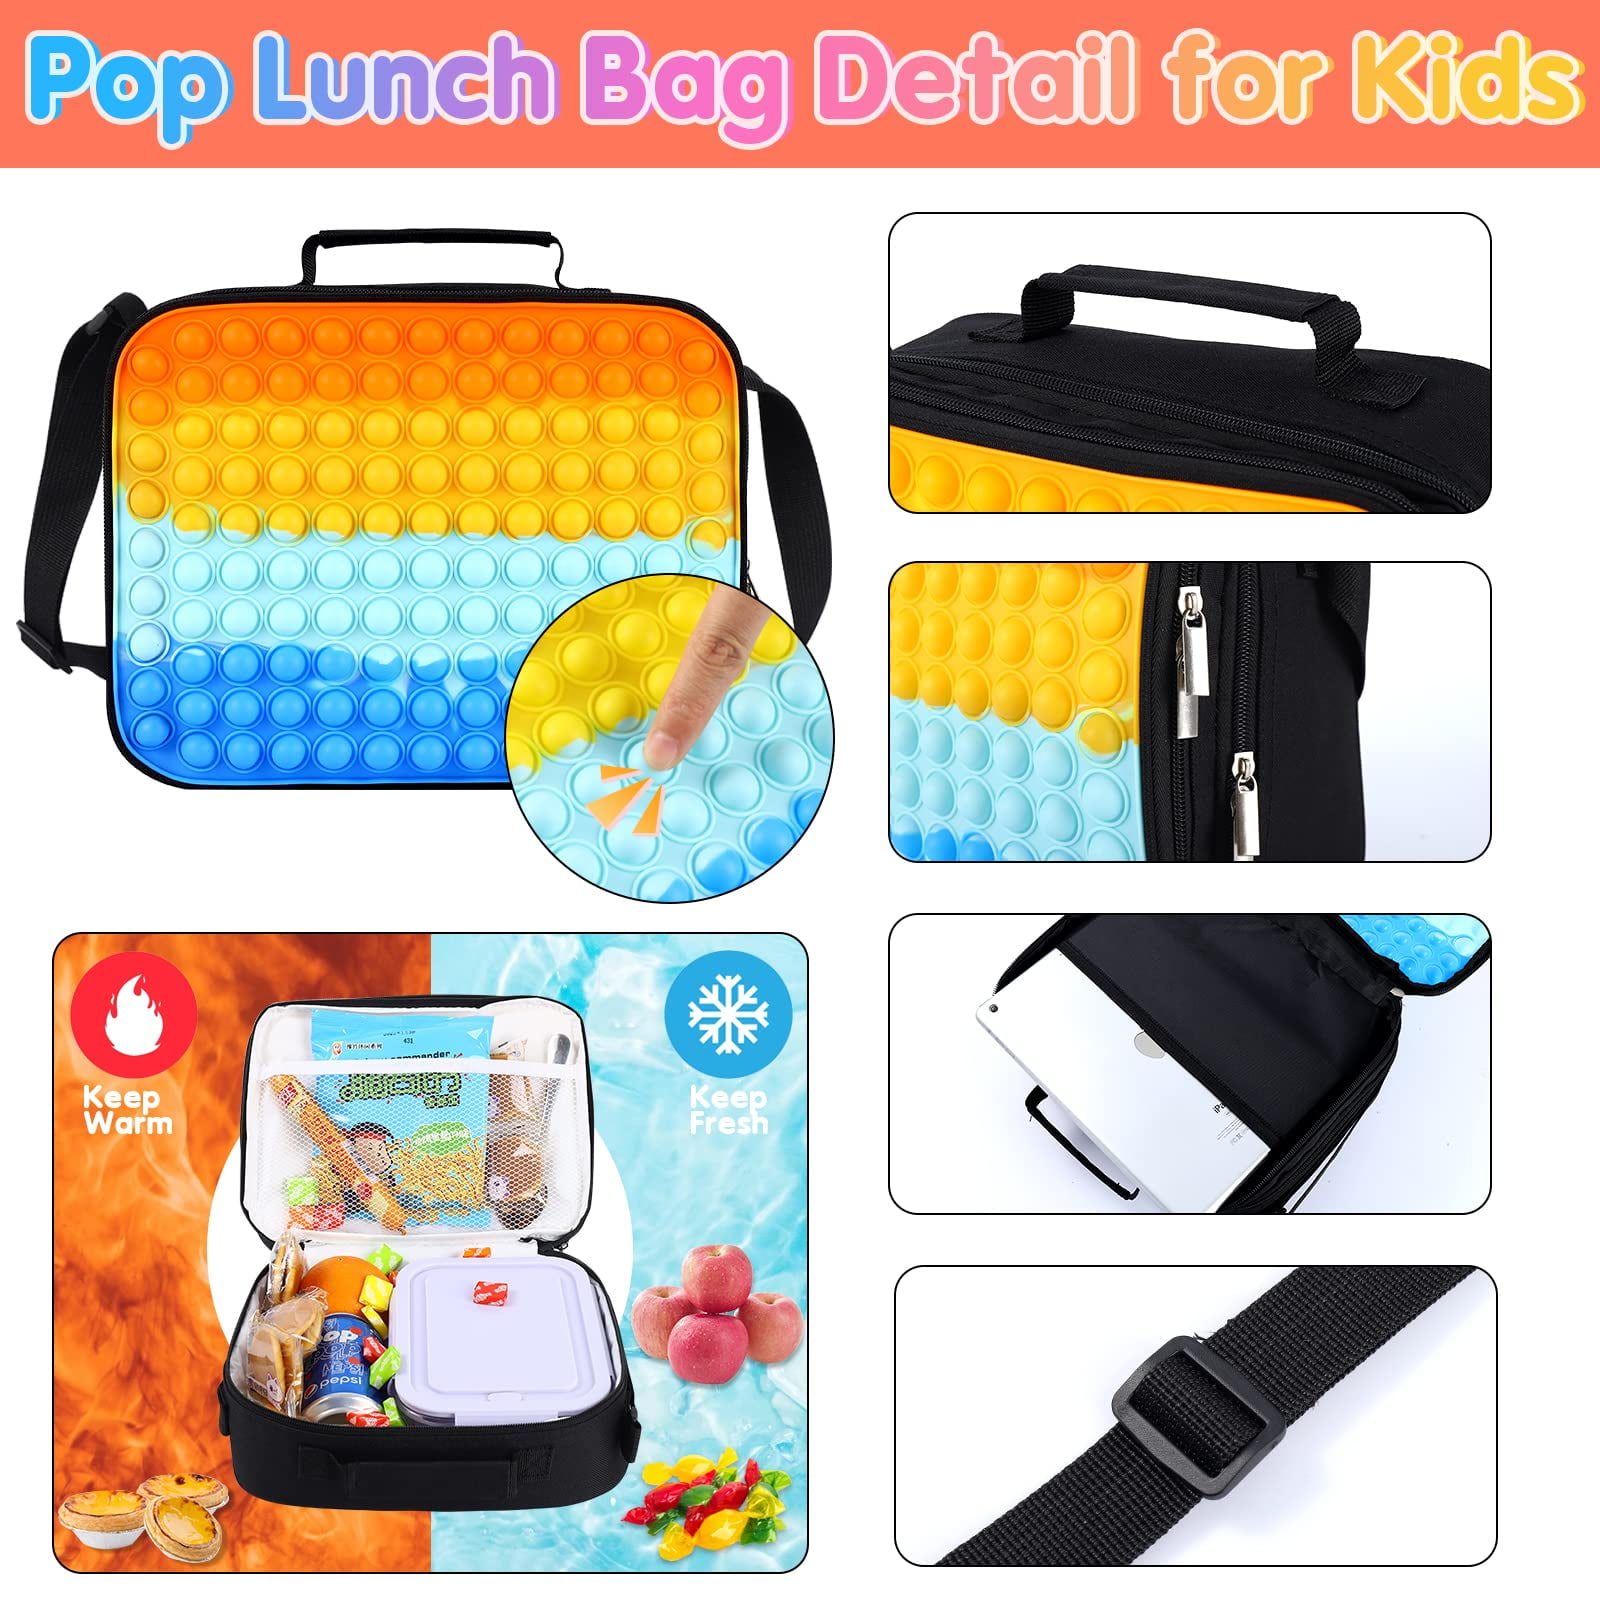  Wsslon Girls Pop Lunch Box,Kids School Lunch Bag